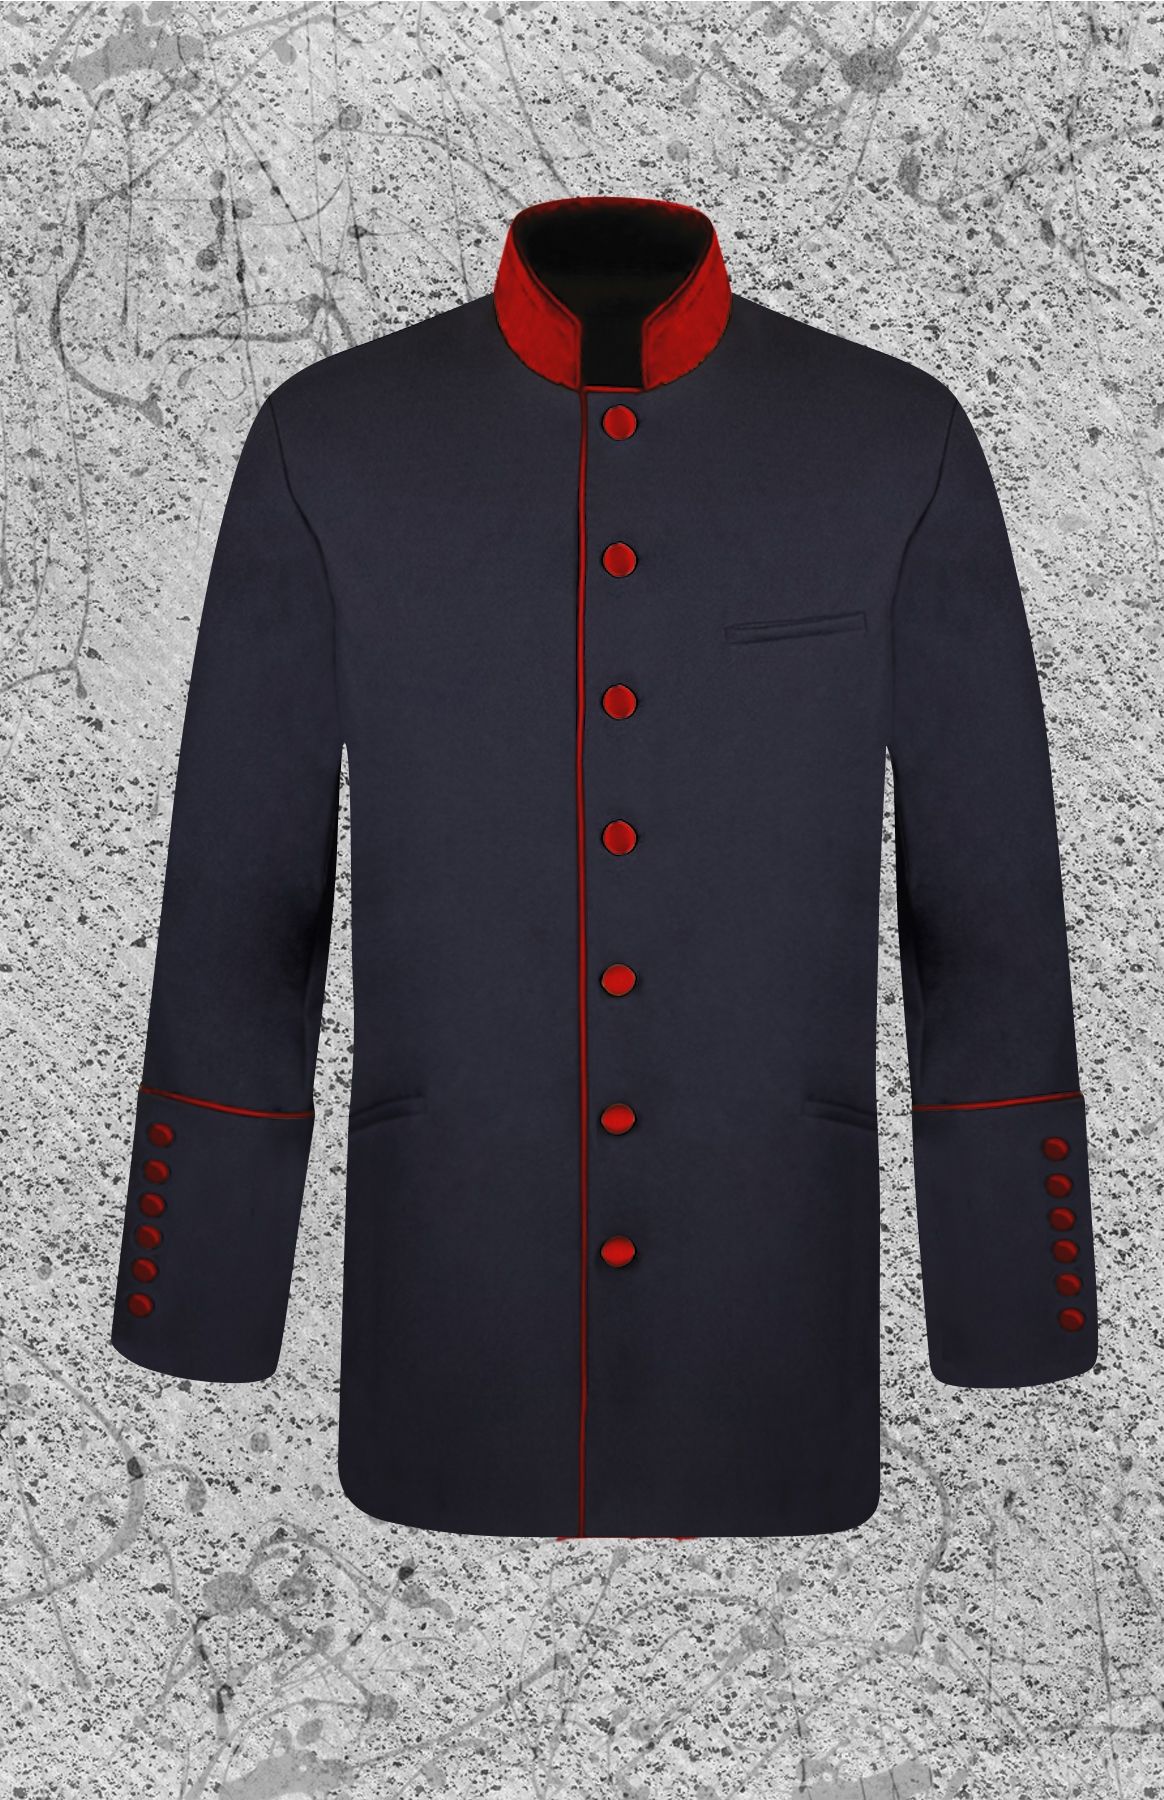 Men's Clergy Frock Jacket - Black/Red